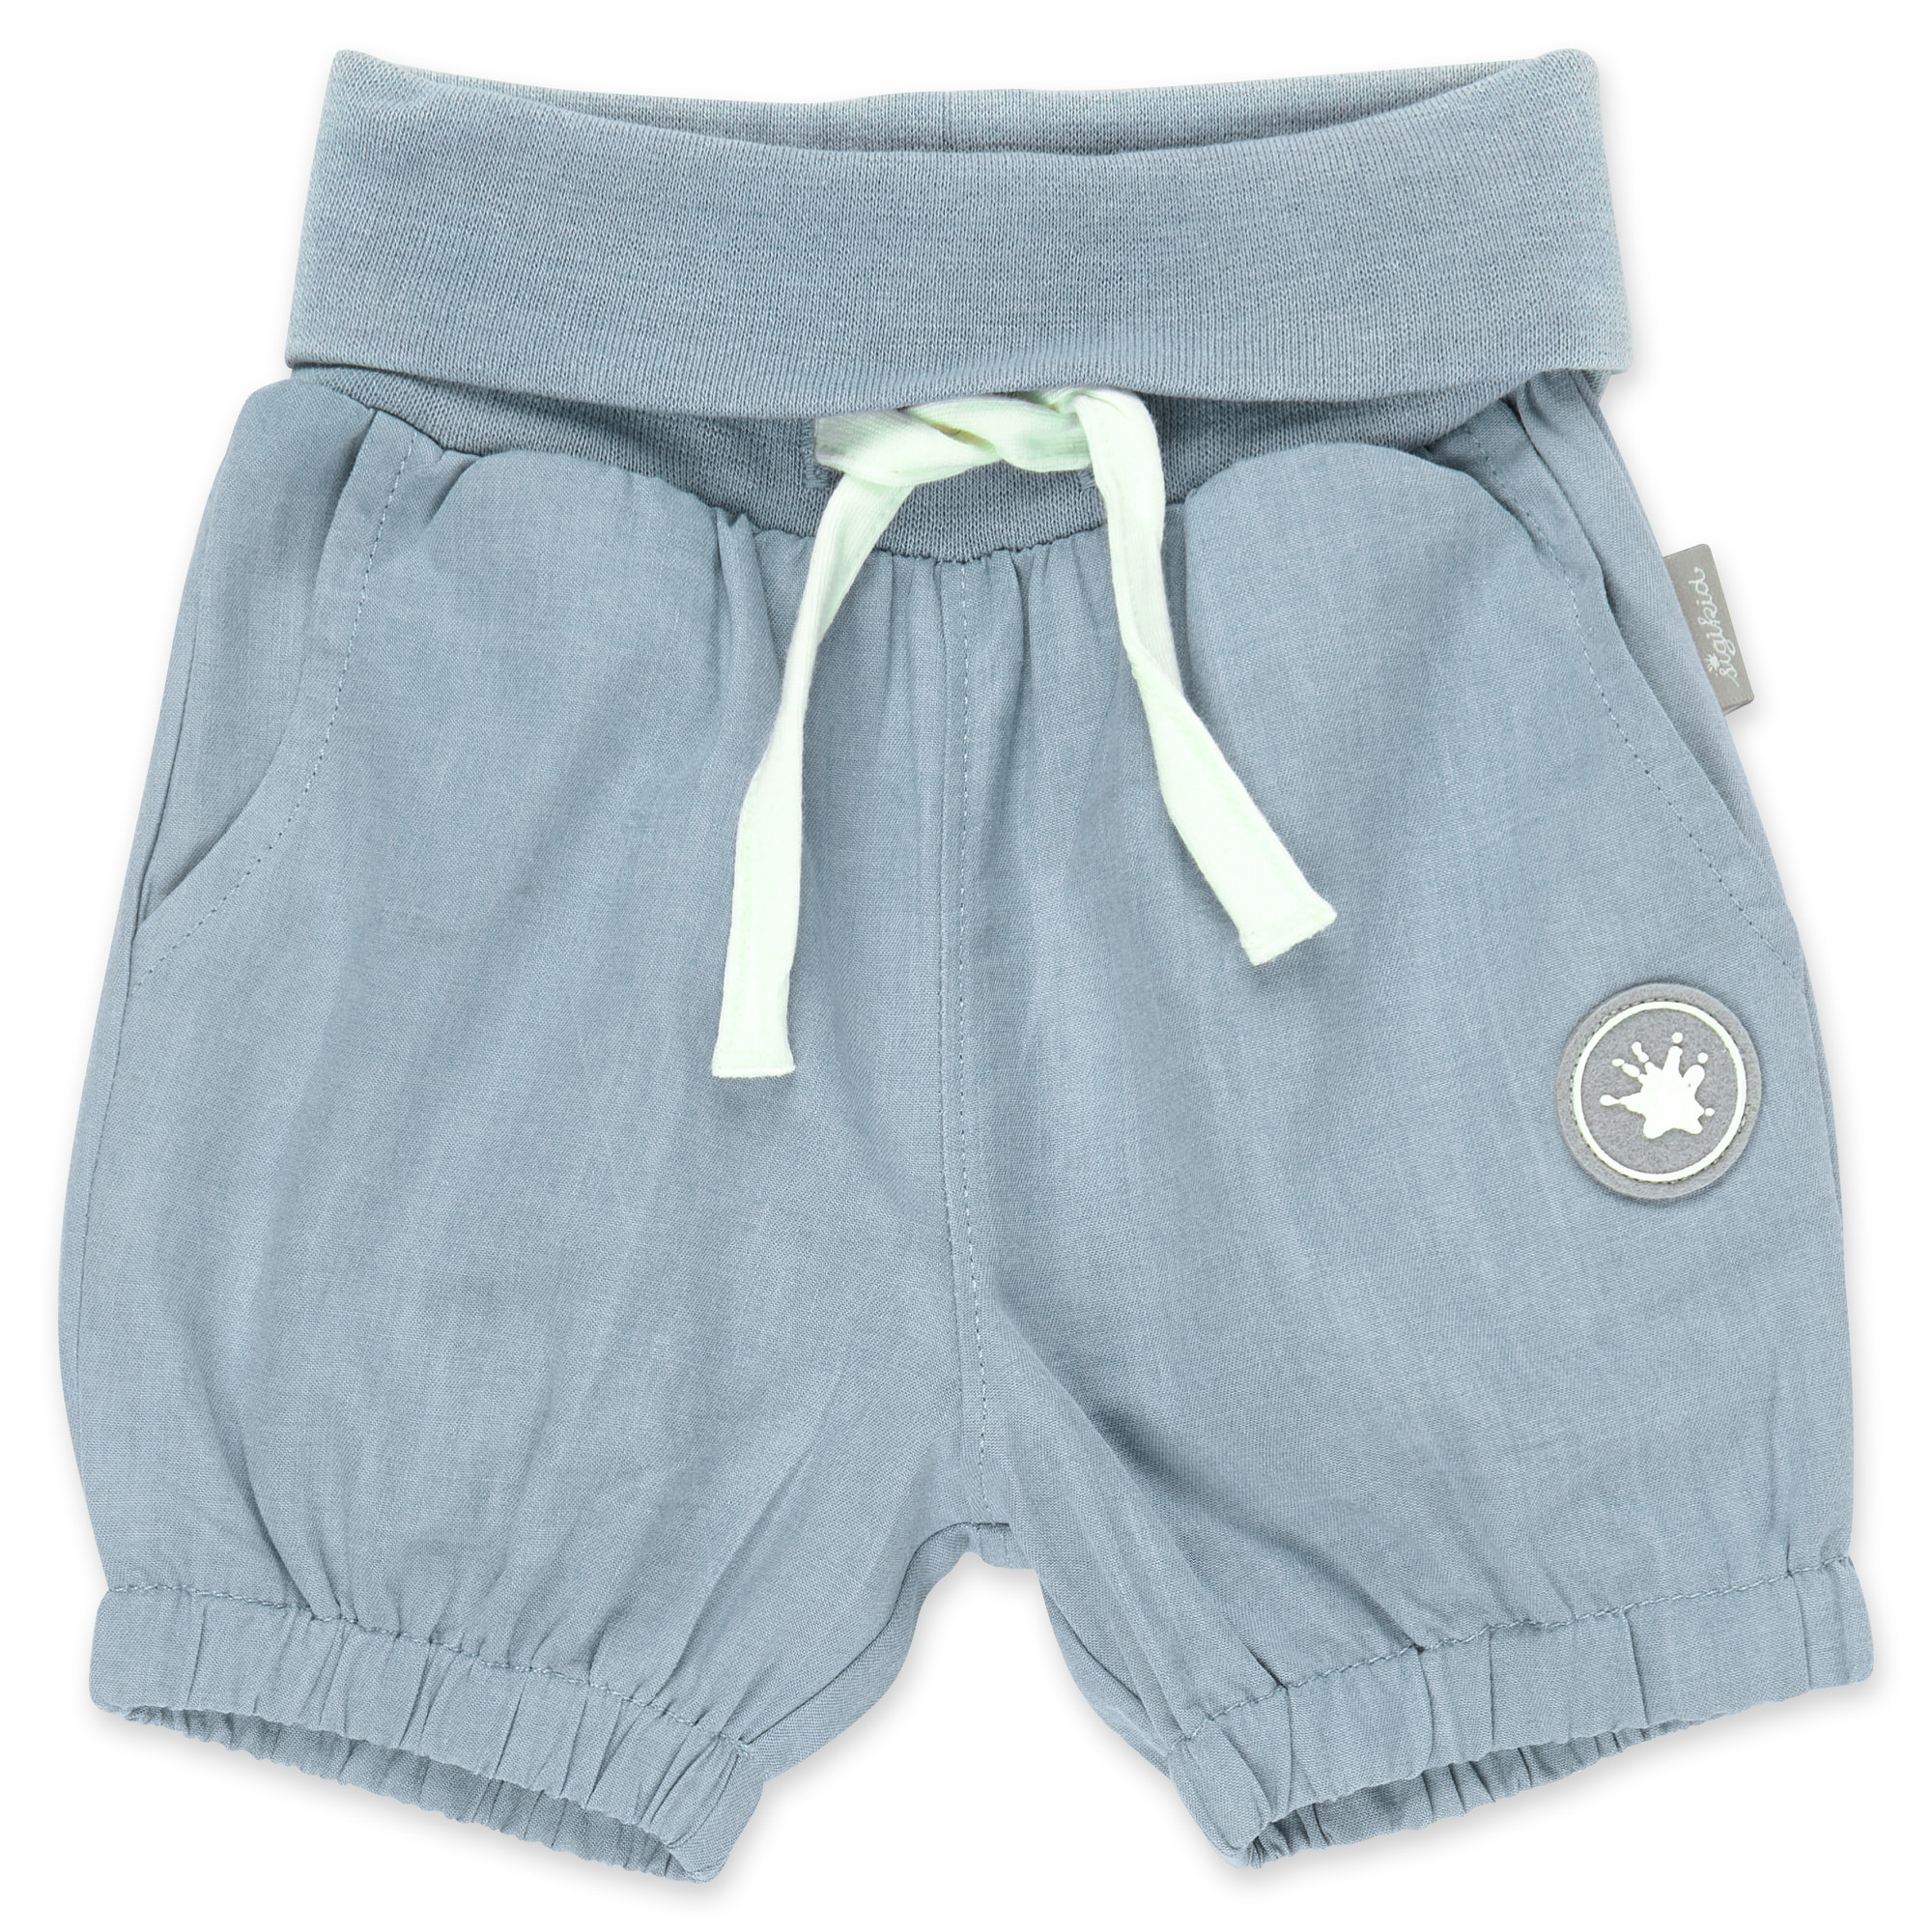 Light blue baby short pants with foldover waist